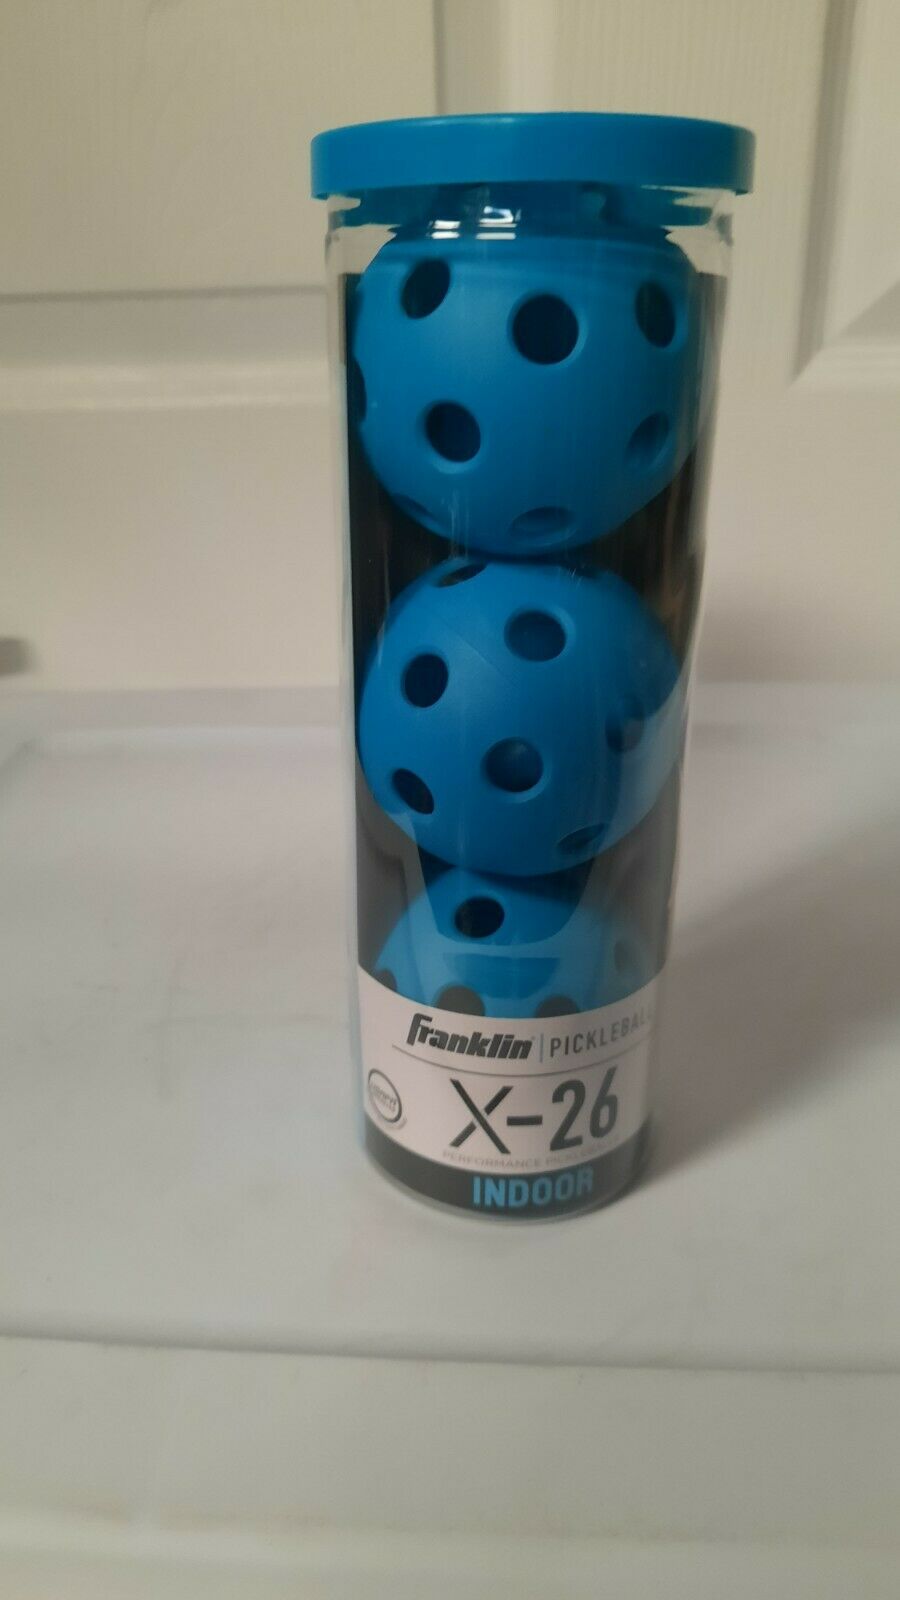 Franklin X - 26 Indoor Pickleball Balls 3 pack